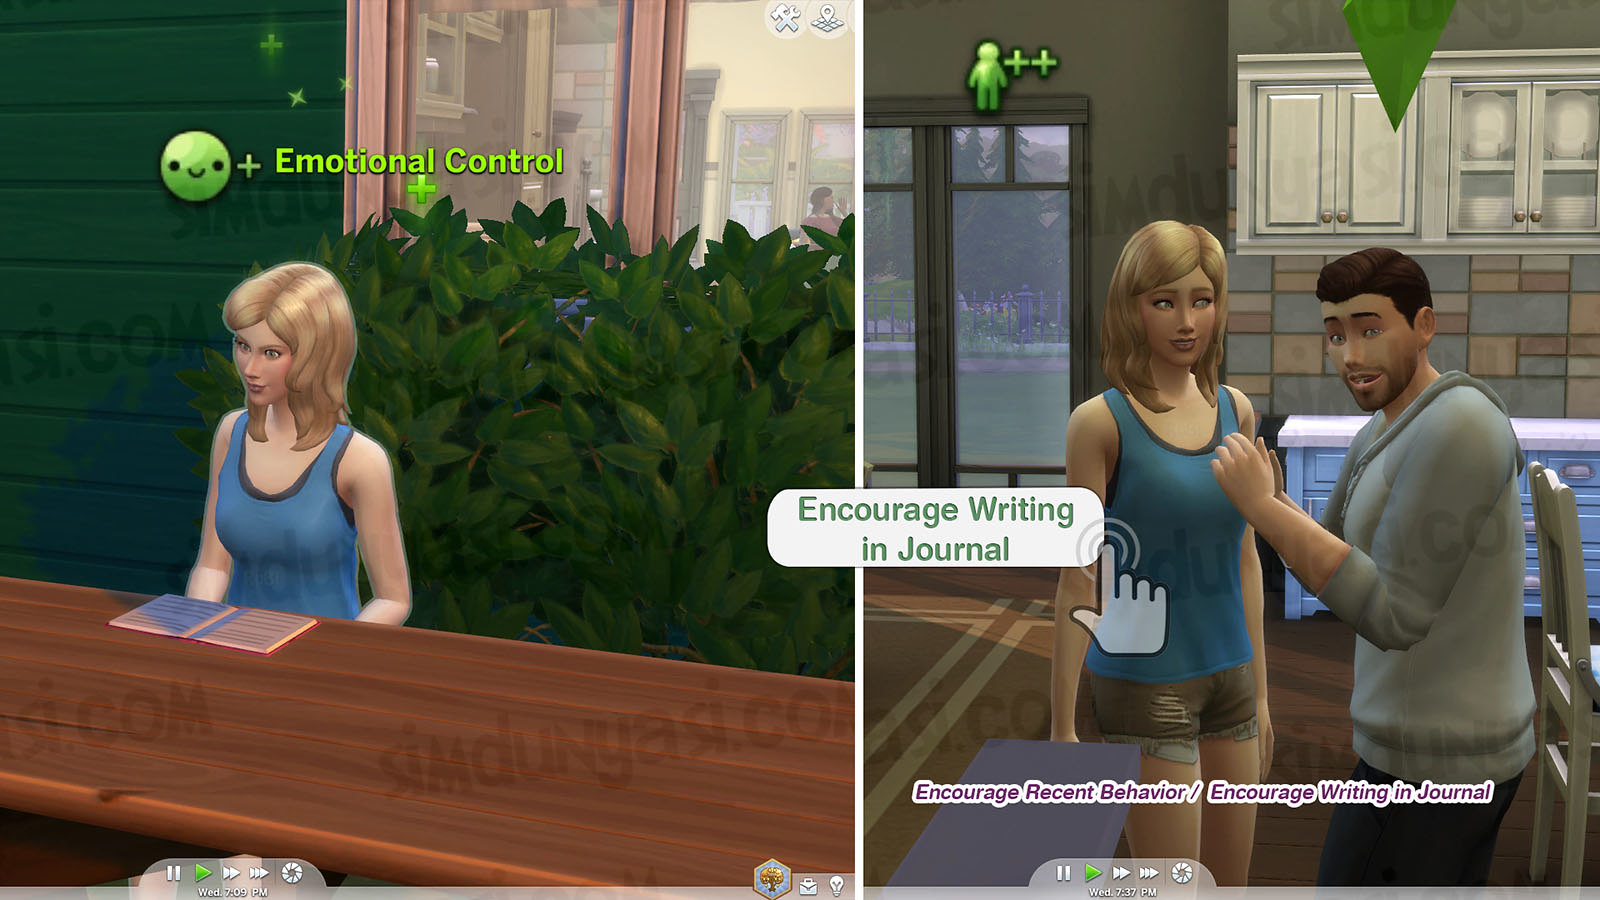 The Sims 4 Parenthood Ebeveynlik Paketi Encourage Recent Behavior Writing in Journal